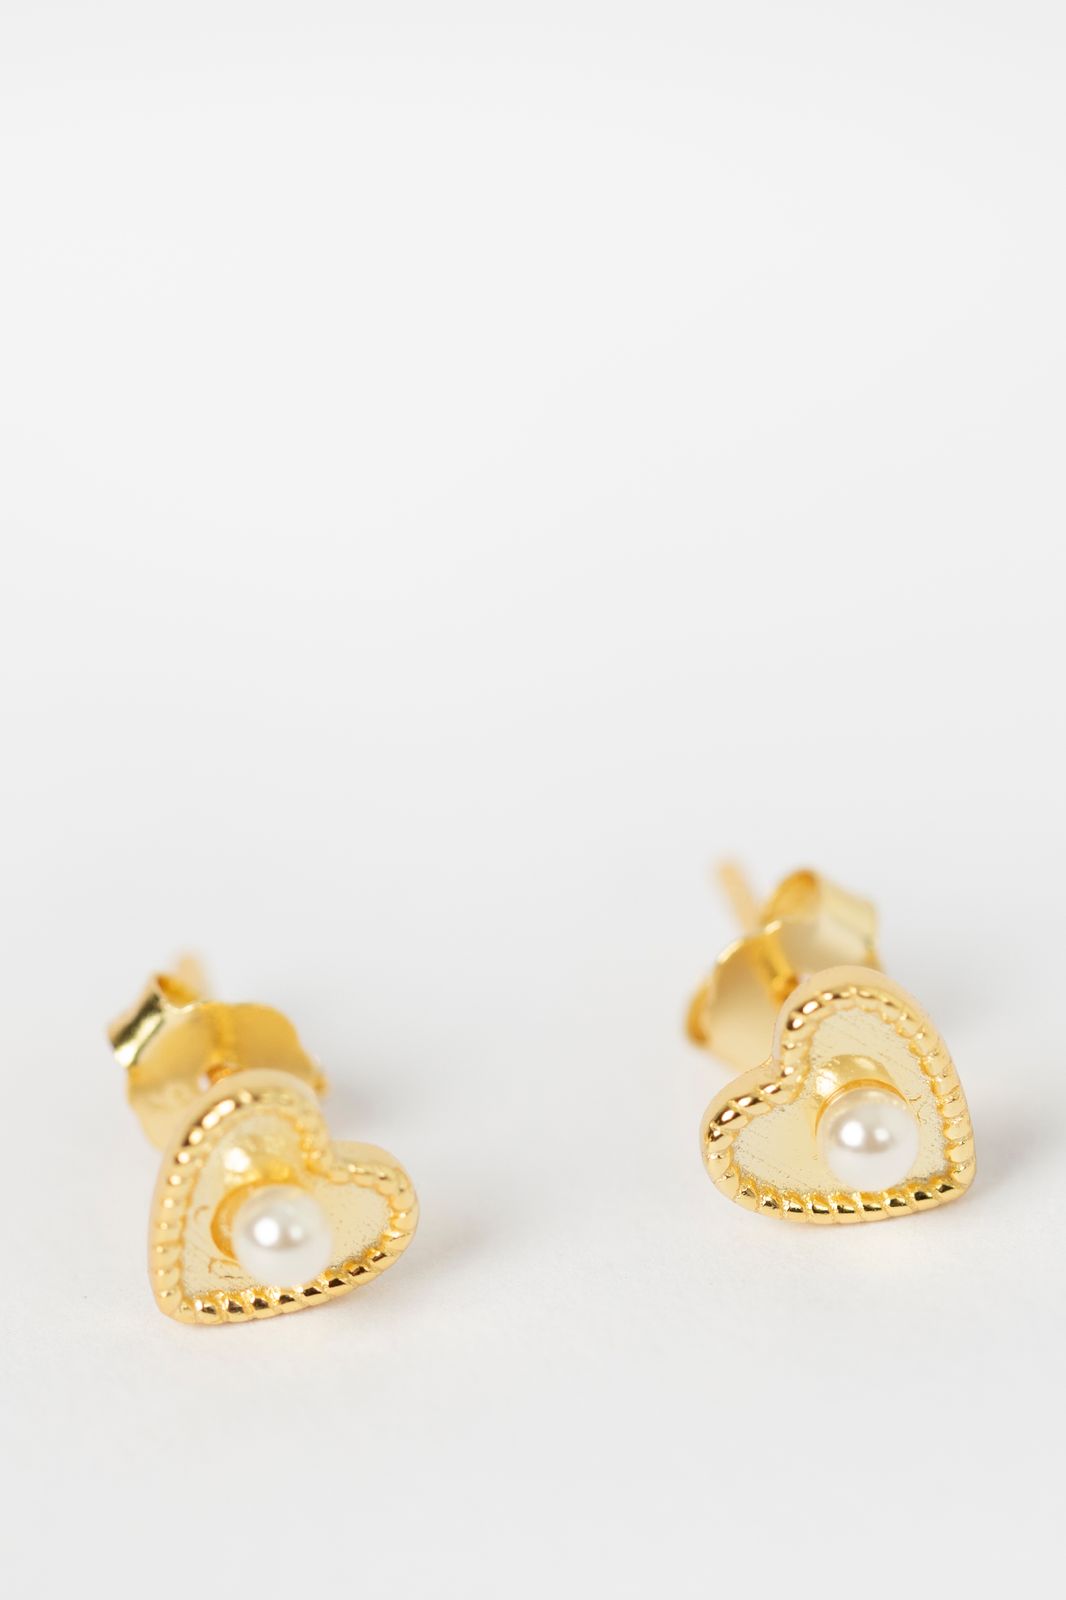 Herzförmige Gold-plated Ohrstecker mit Perle